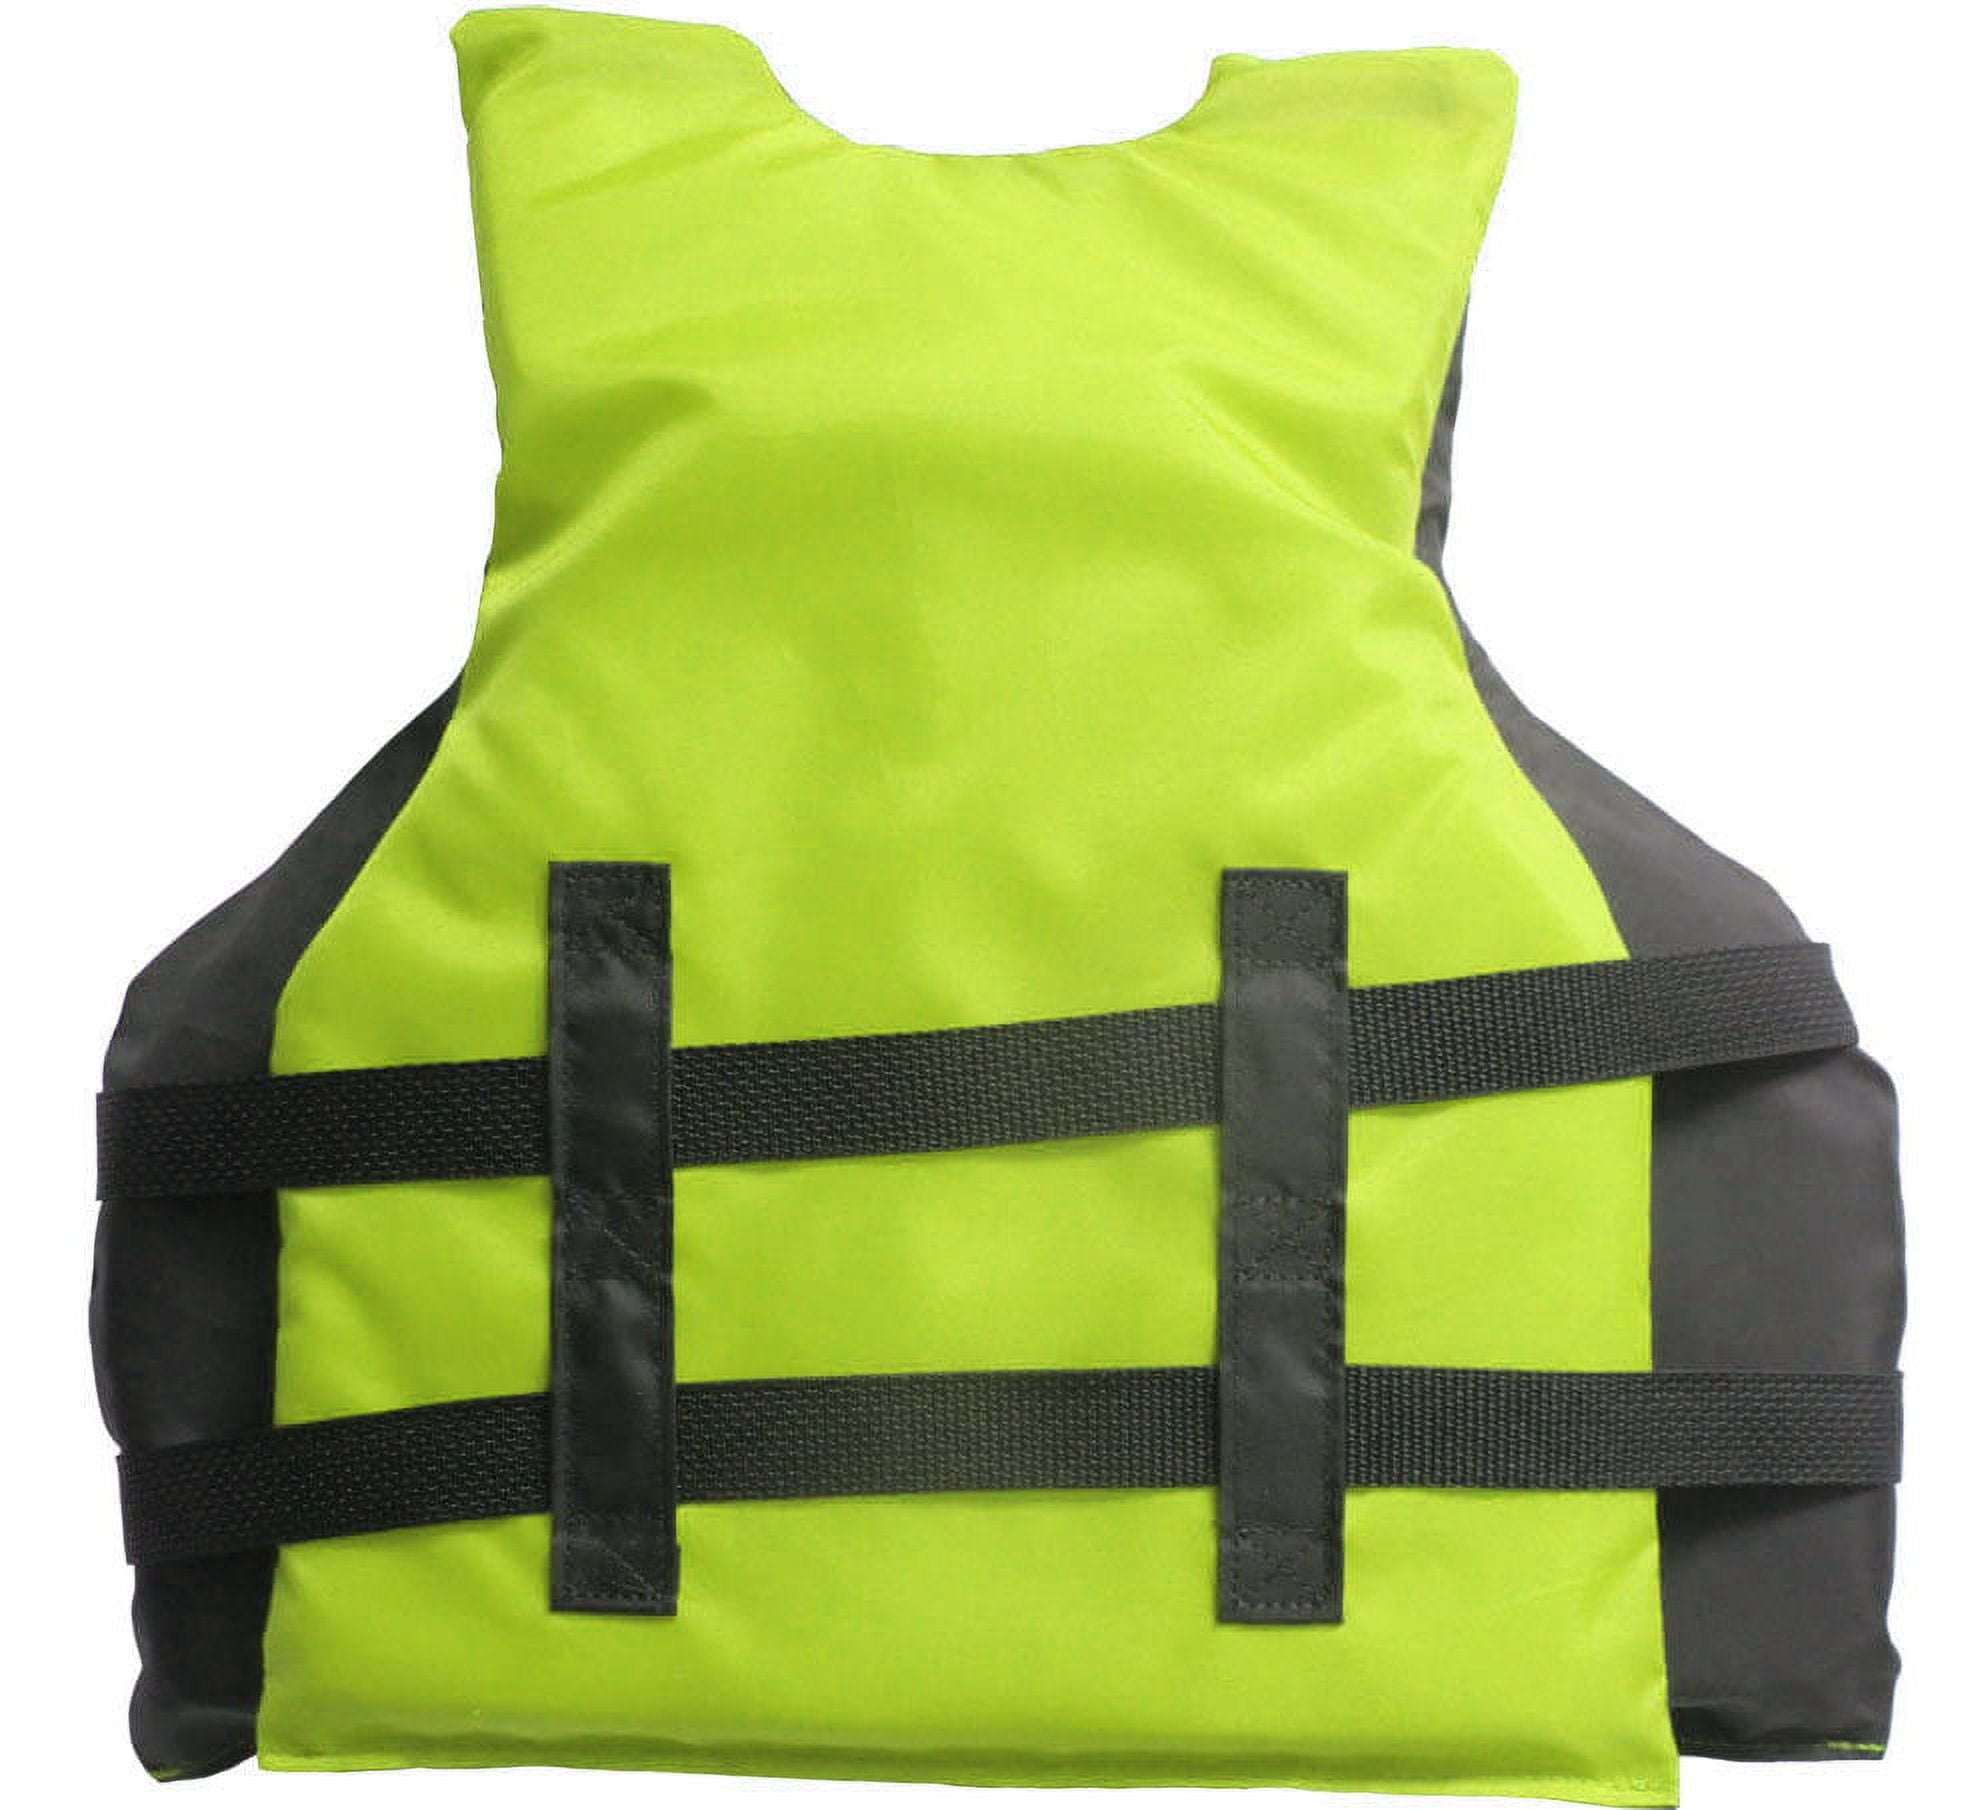 Hardcore Water Sports Hardcore youth life jacket paddle vest for big kids  from 50-90 pounds ; Coast Guard approved Type III PFD life vest flotation  device; Jet ski, wakeboard, hardshell kayak lufe